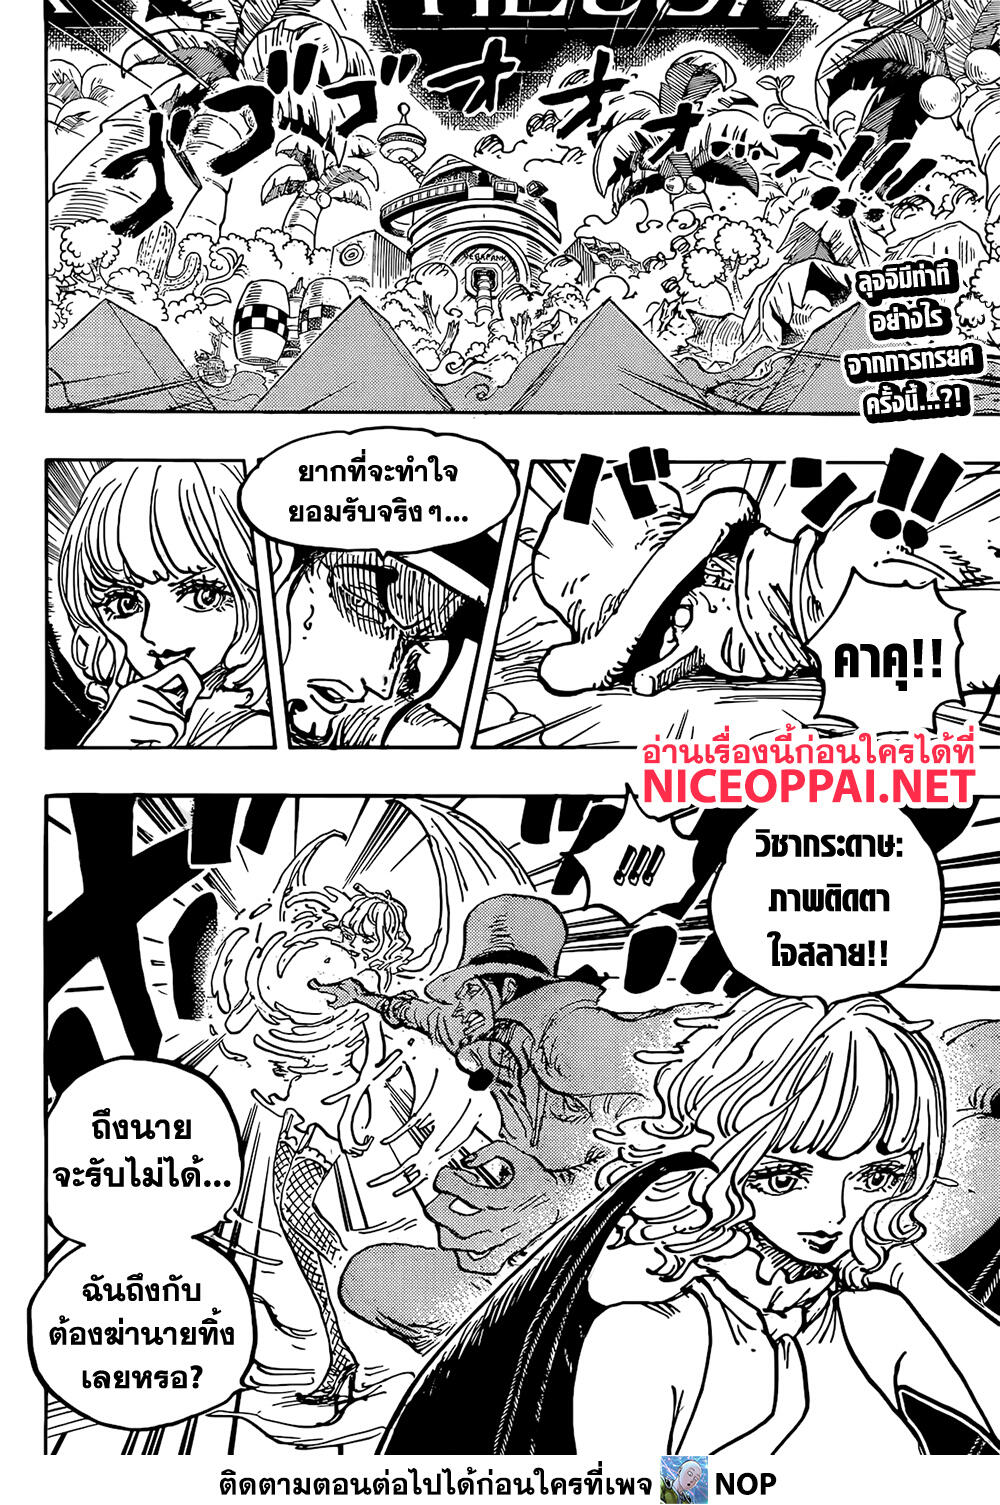 One Piece 1073 TH